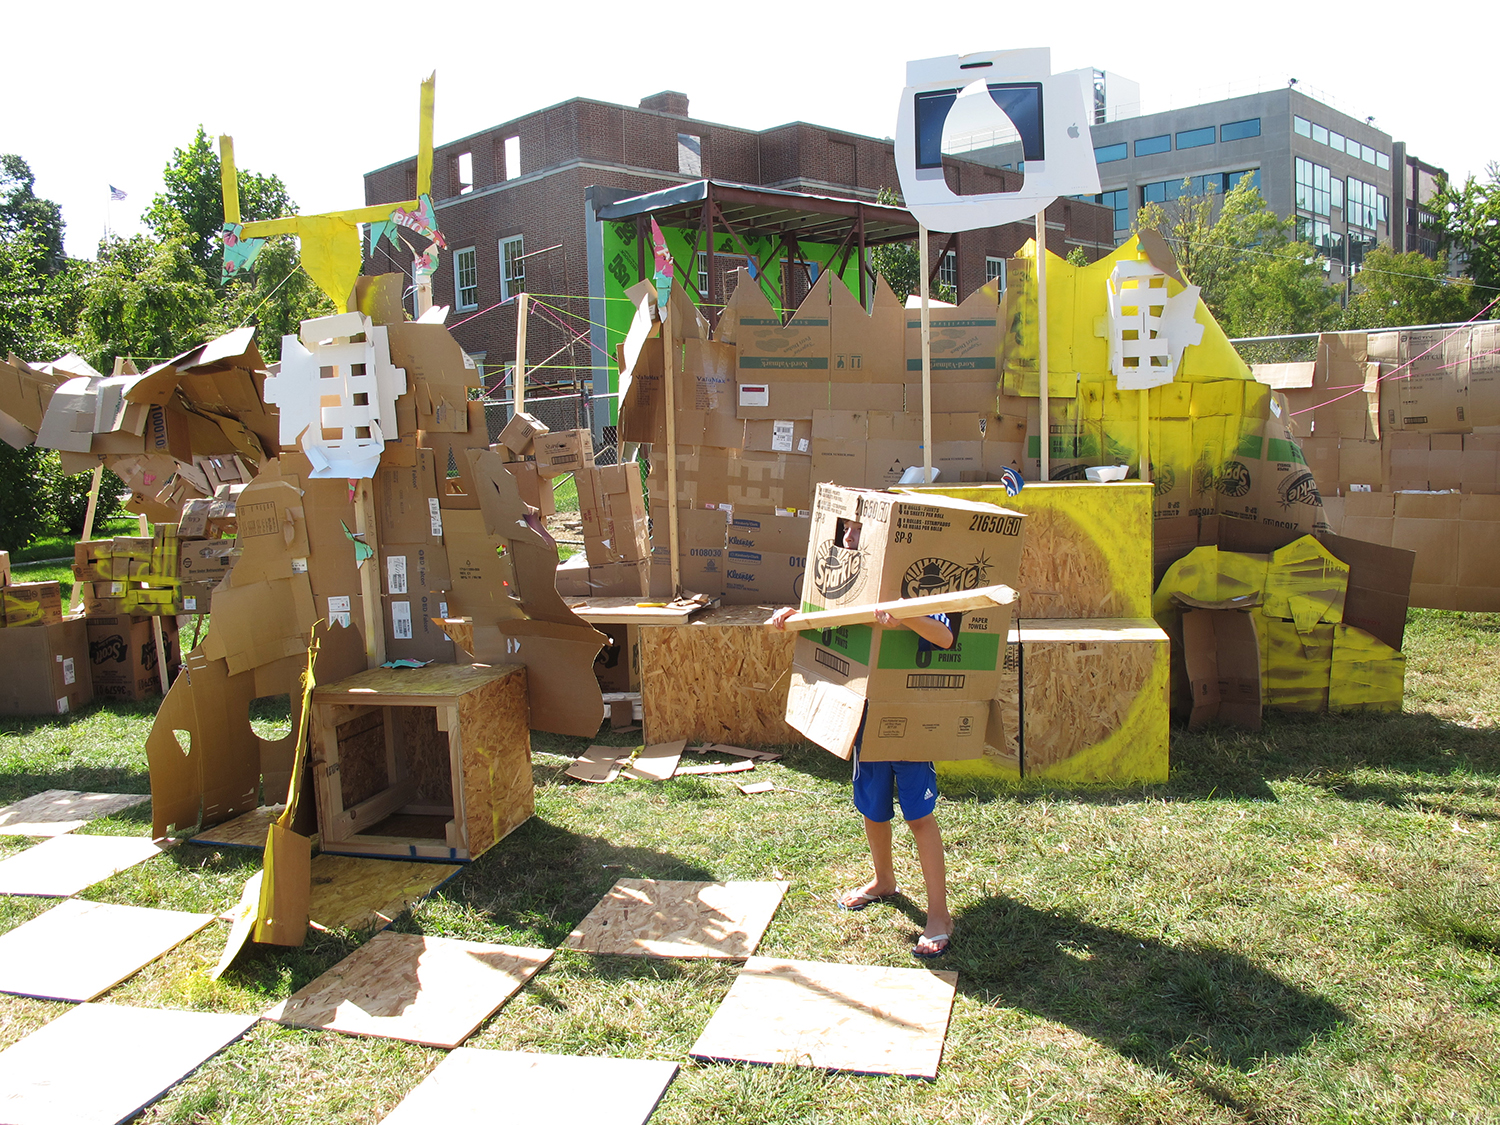    Cardboard Village   , 2013, Philadelphia PA,  collaborative public art project, IDEA Days Design Festival 